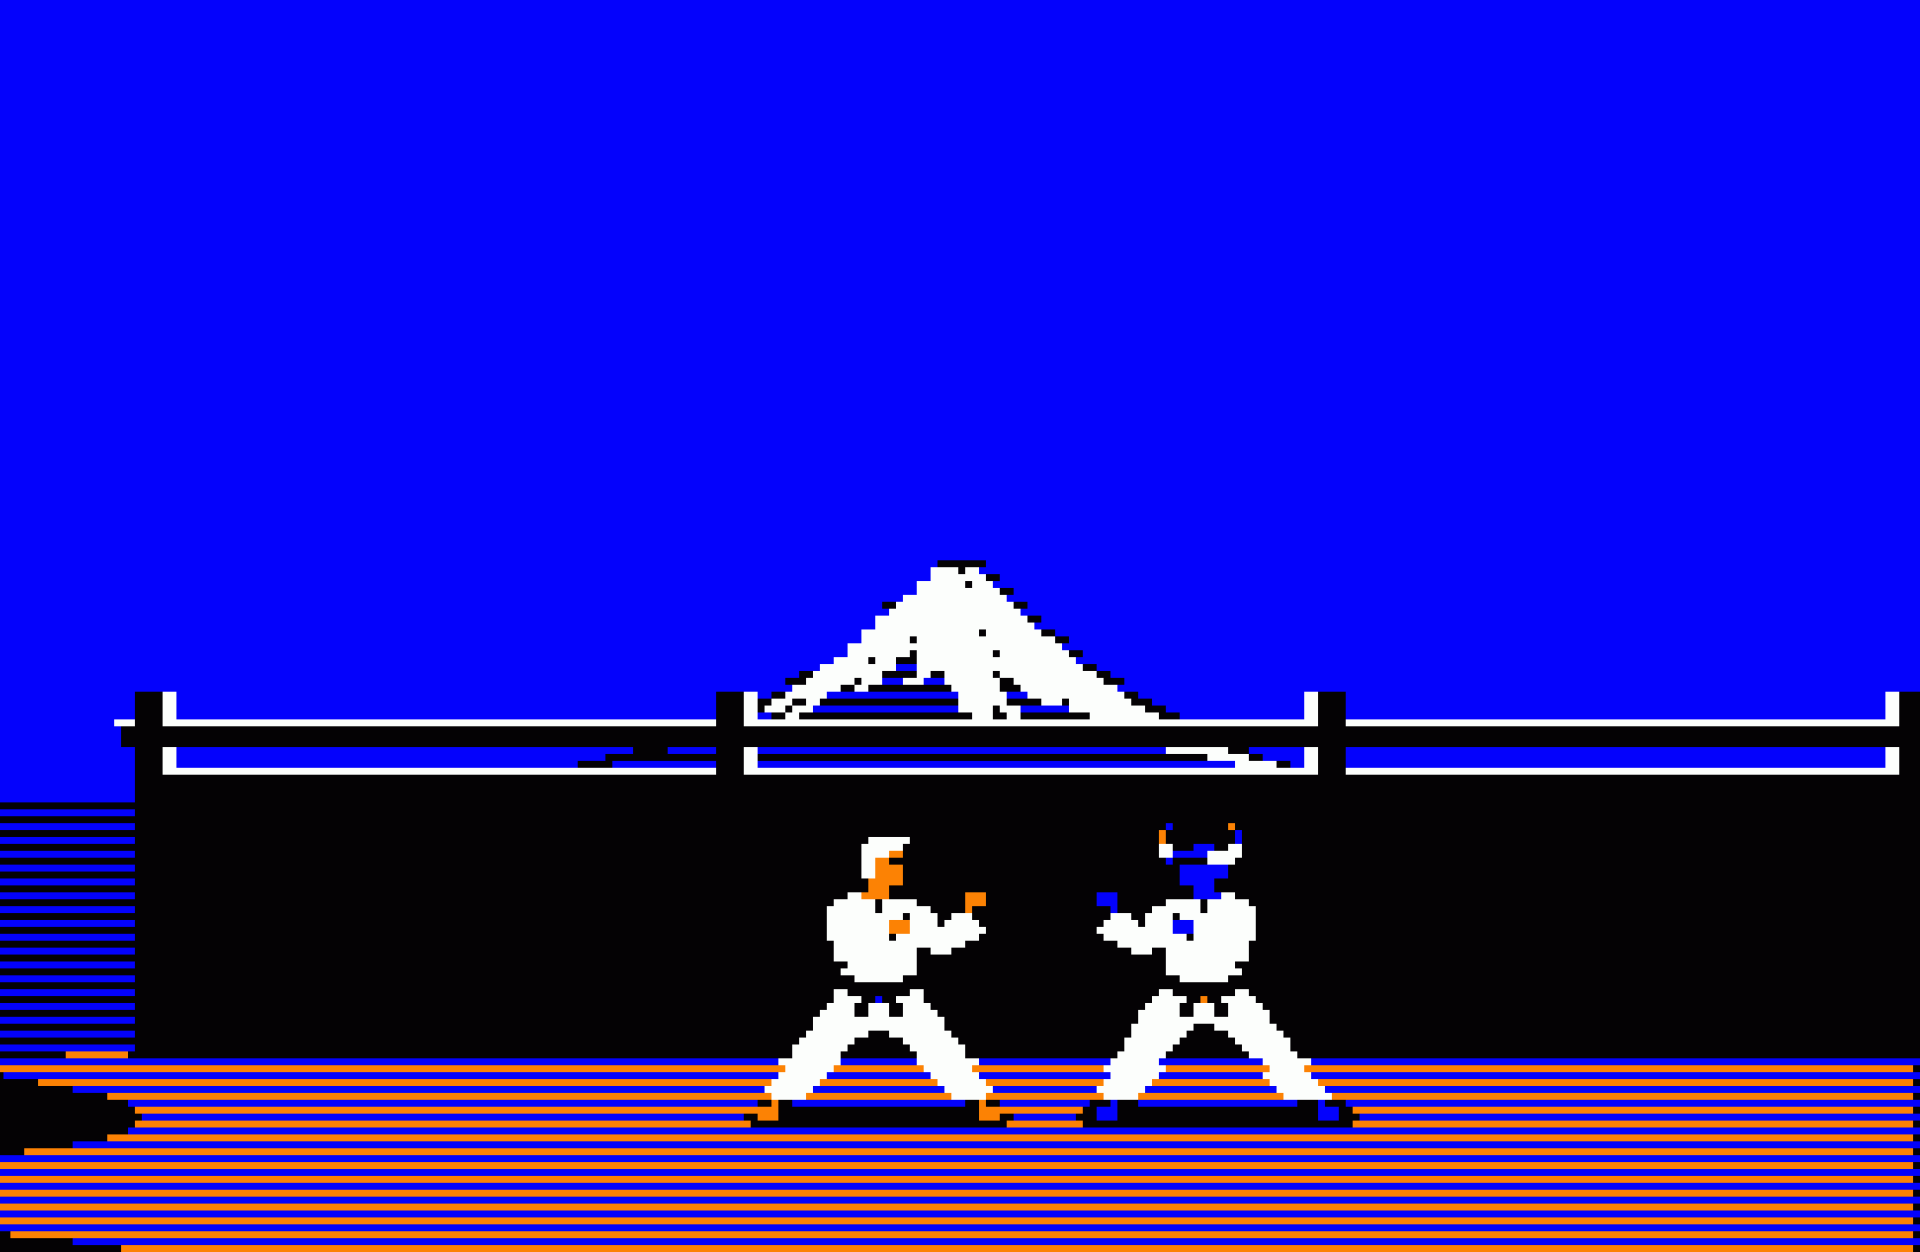 « Karateka », premier jeu commercial de Jordan Mechner sorti en 1984.